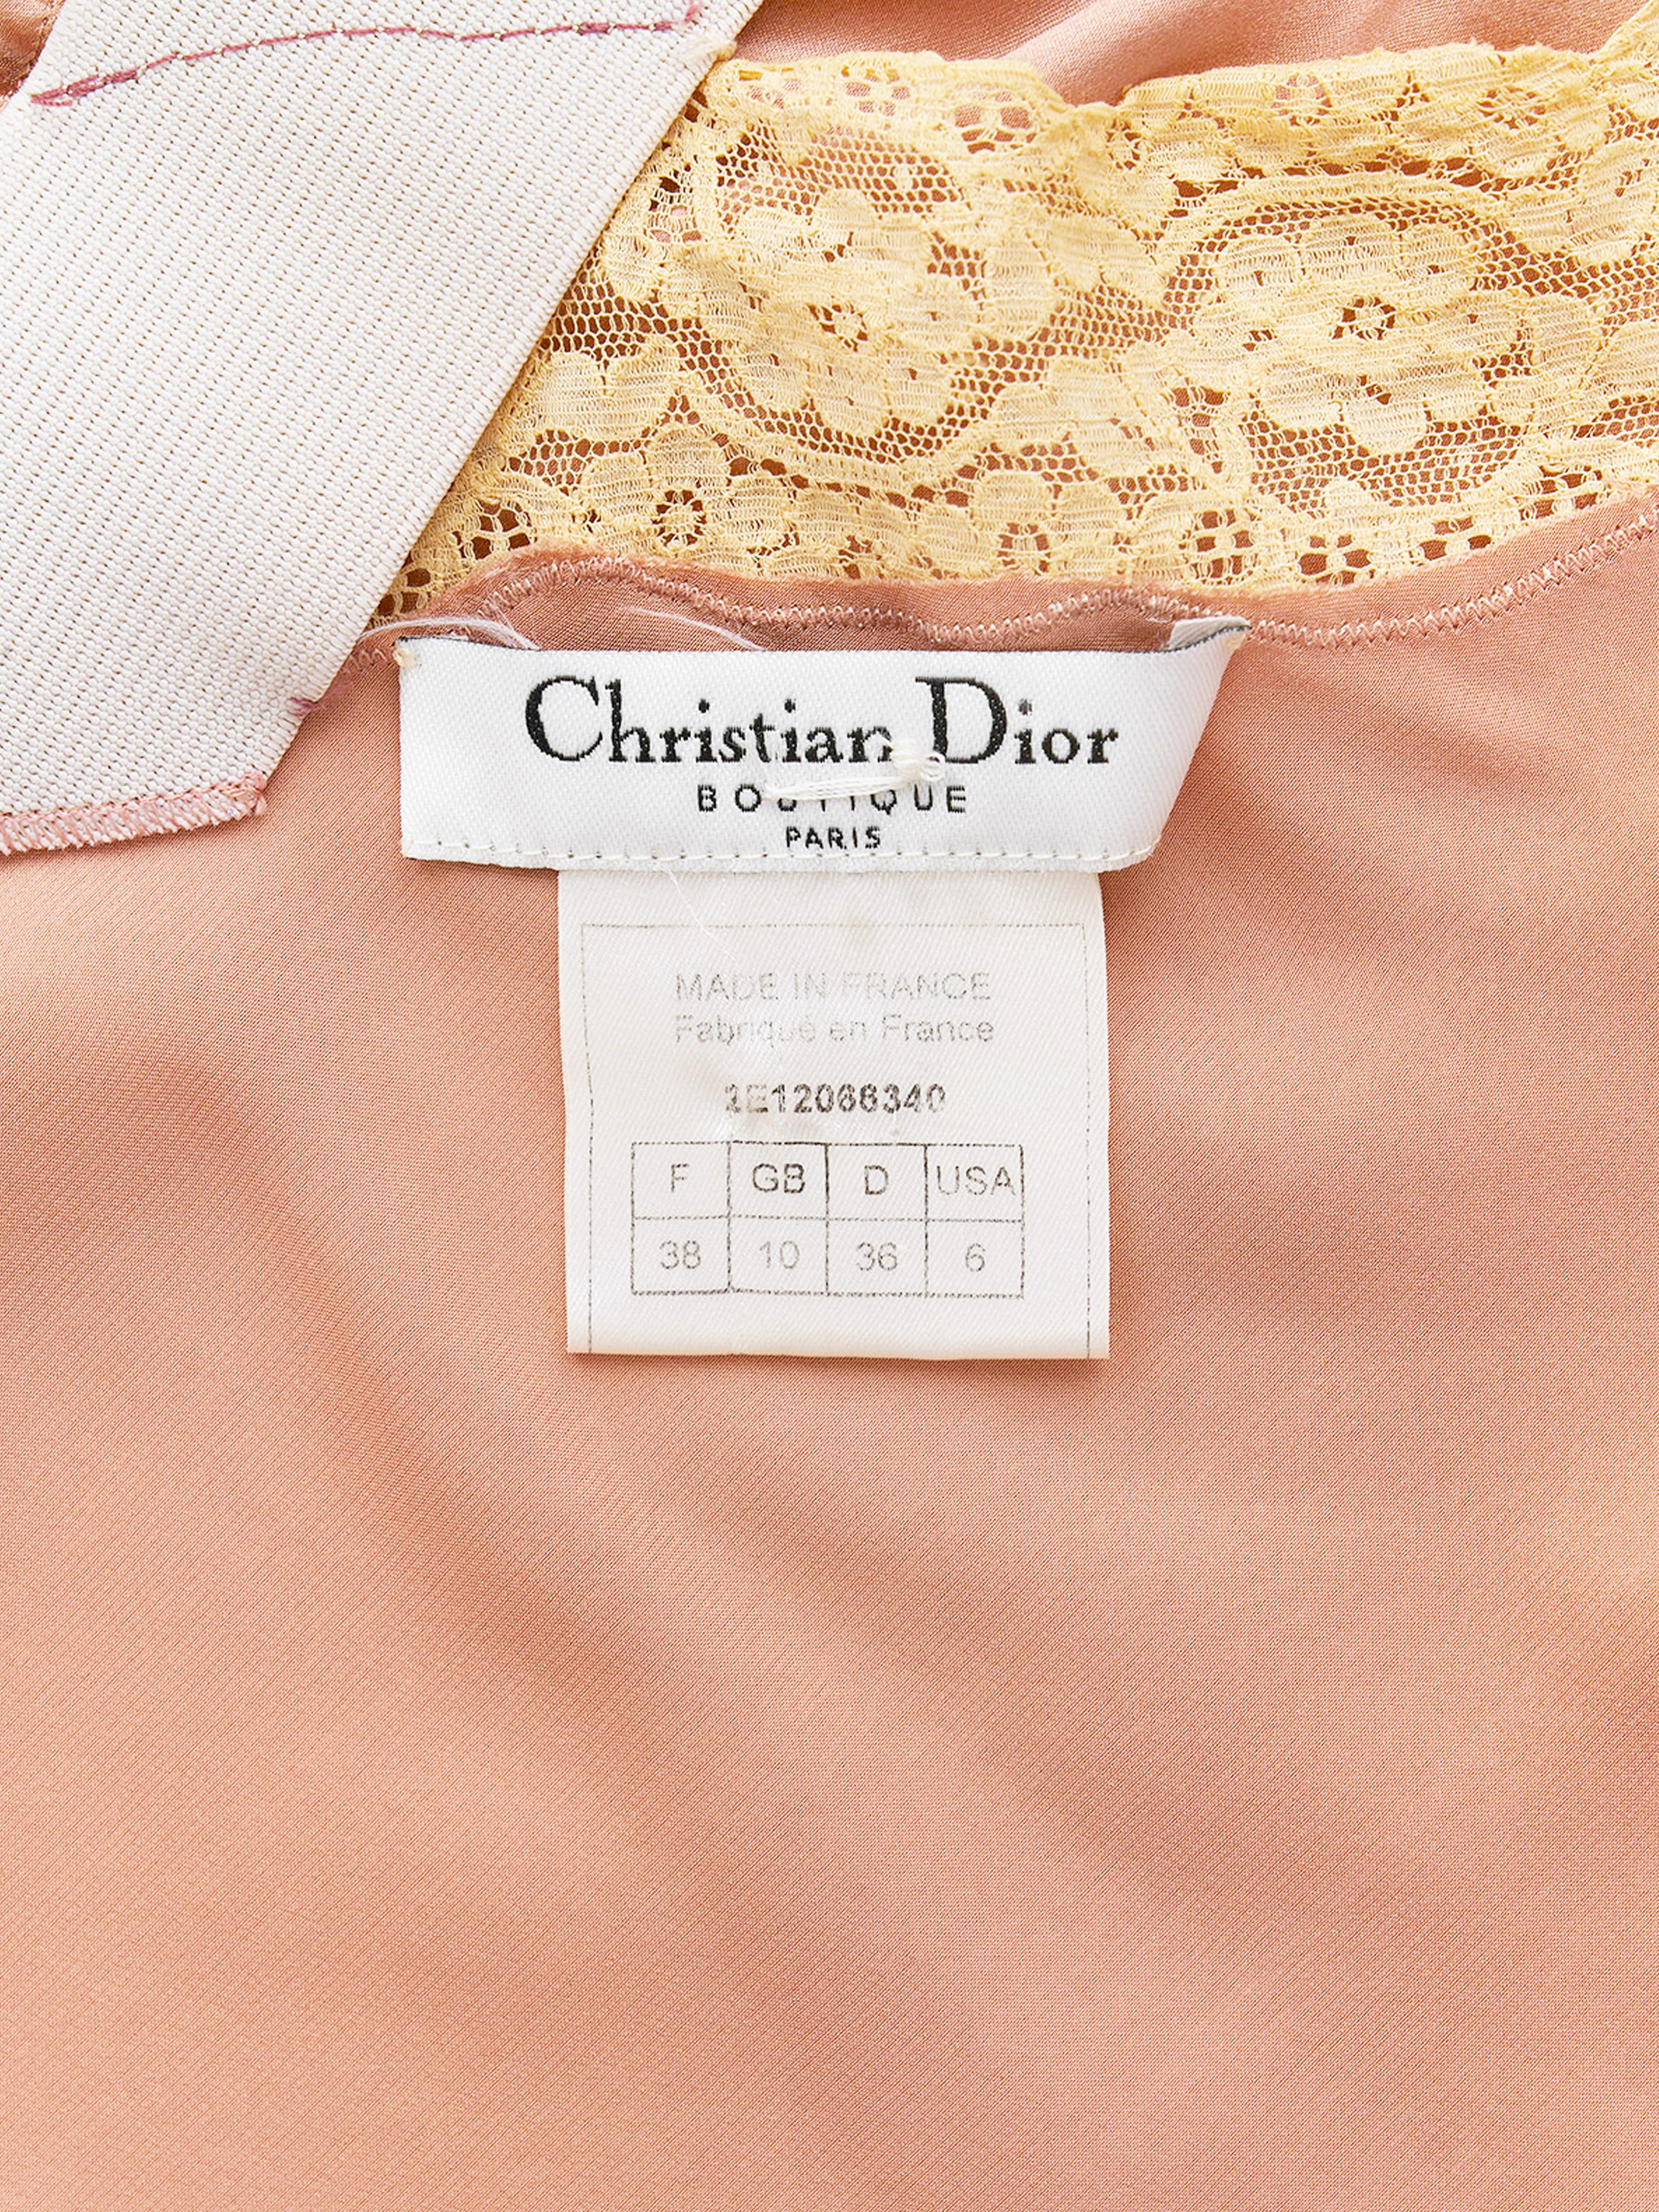 Christian Dior by John Galliano Spring 2002 Rare Silk Dress